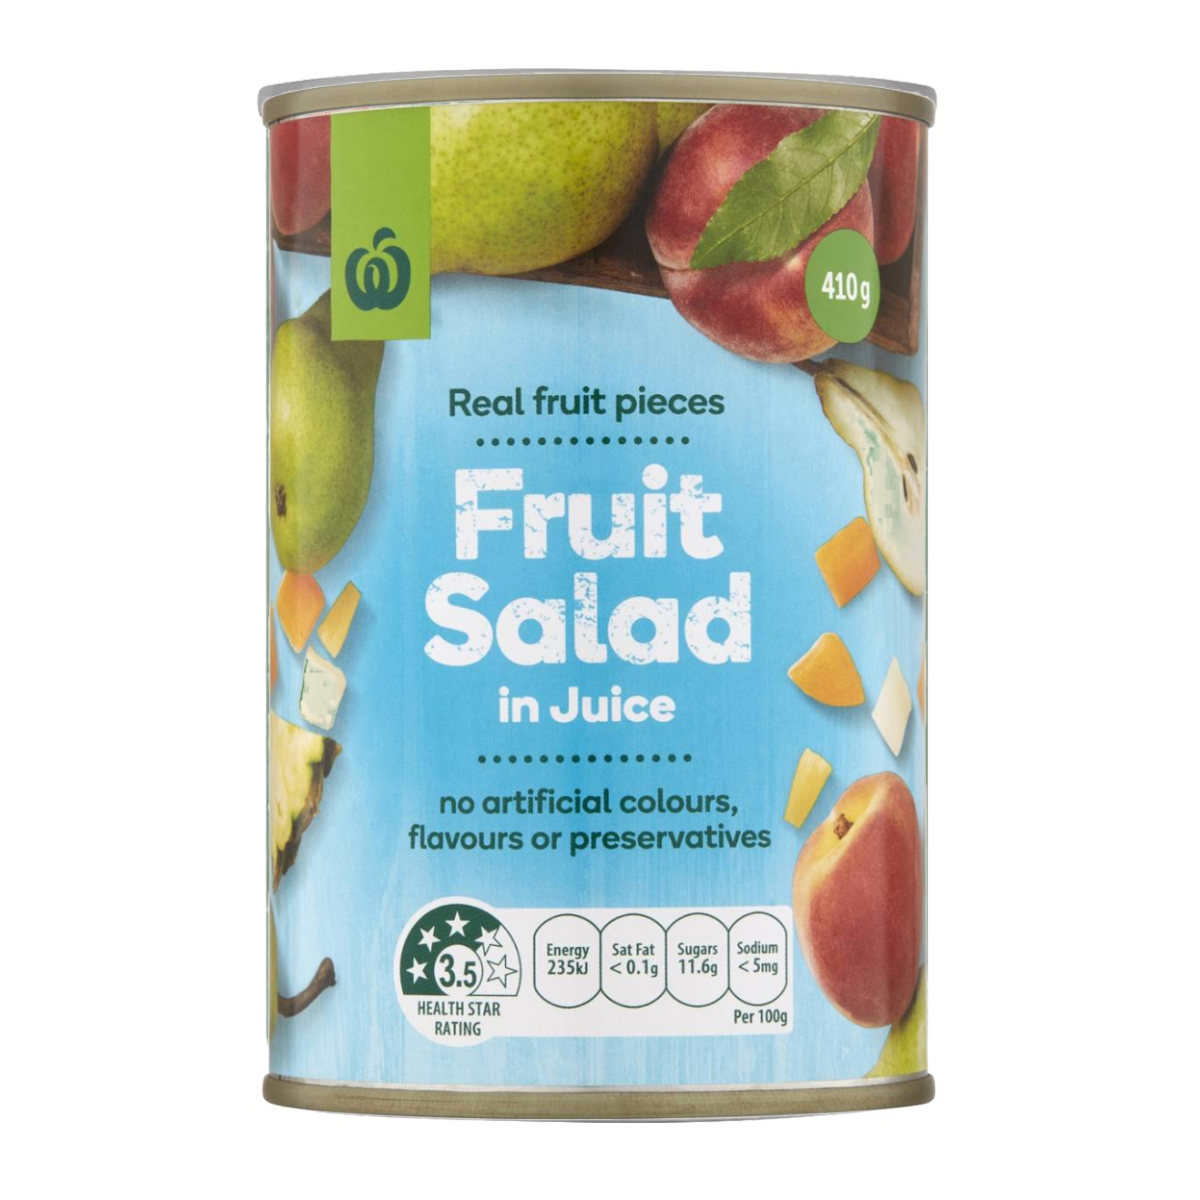 WW Fruit Salad In Juice 410g